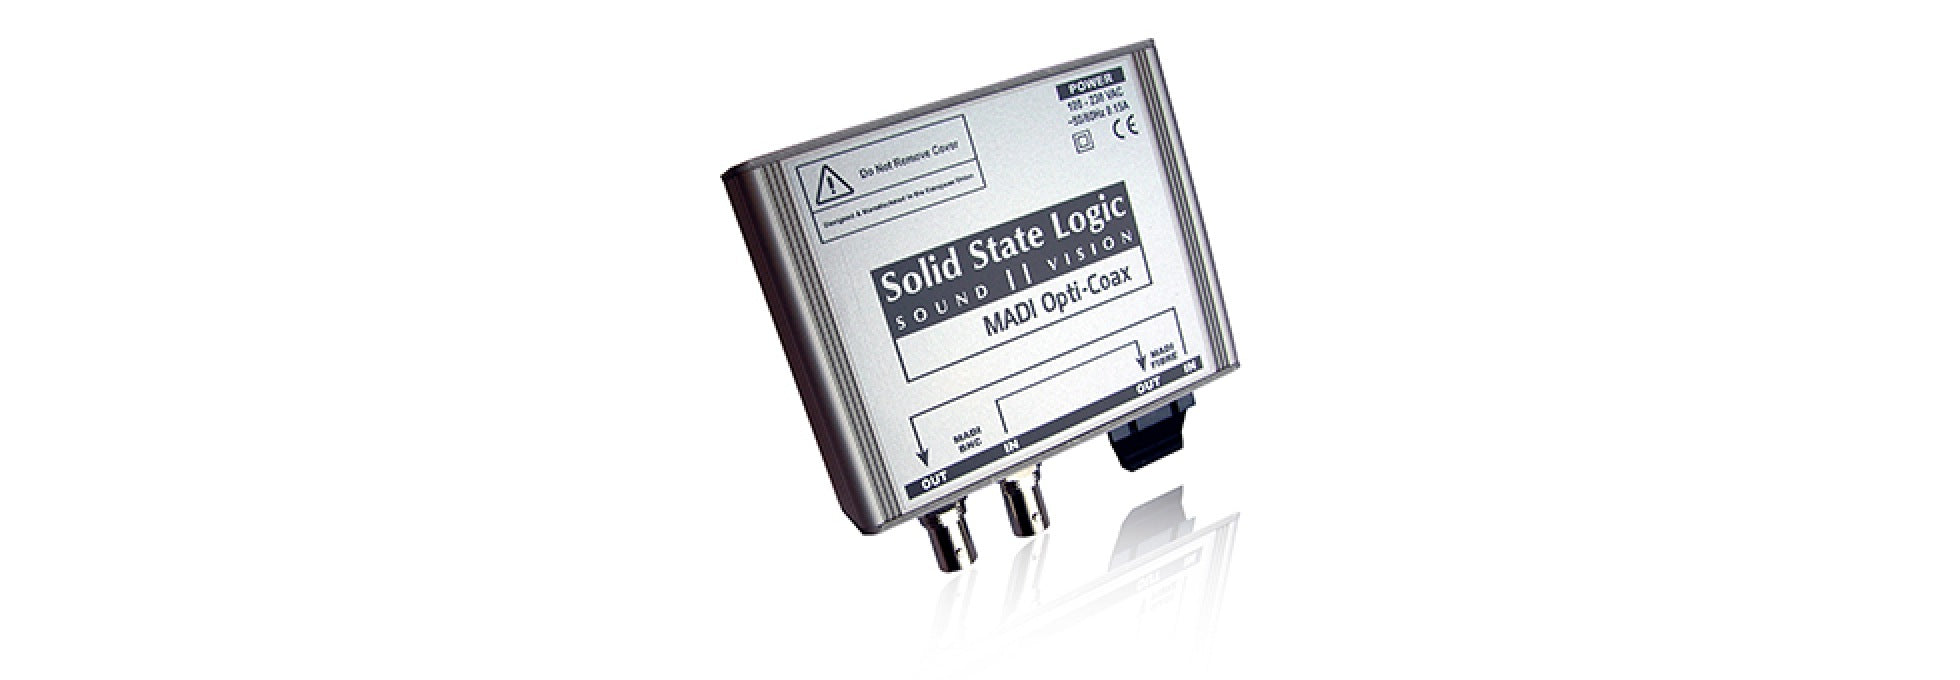 Solid State Logic - SSL MADI Opti-Coax - Interfaces - Professional Audio Design, Inc